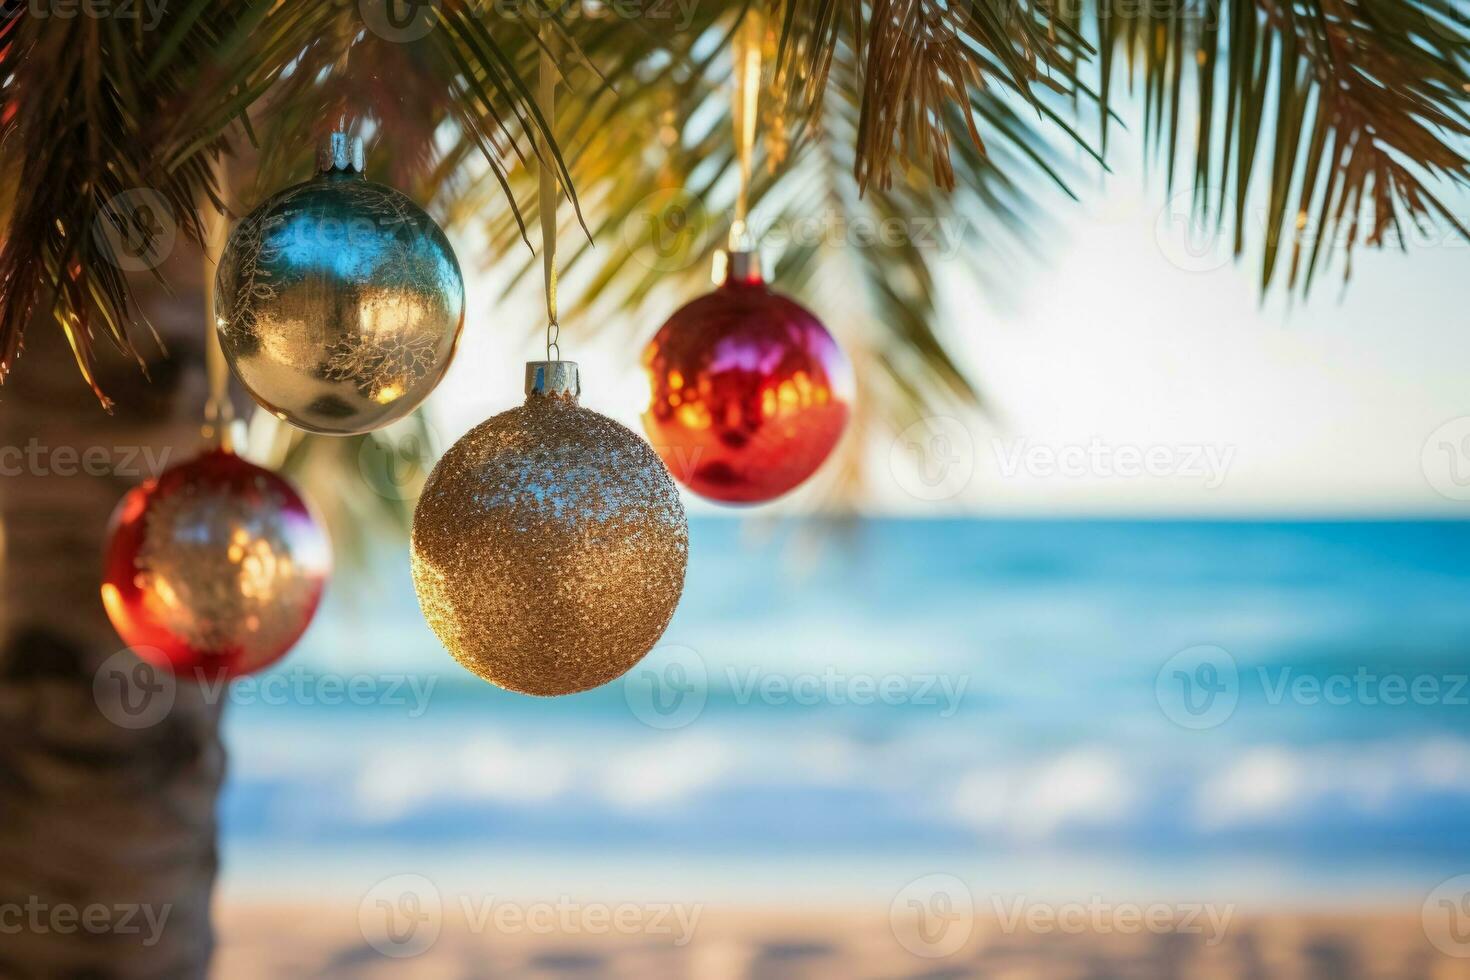 Christmas ornaments gleaming on palm trees along a serene tropical beach photo